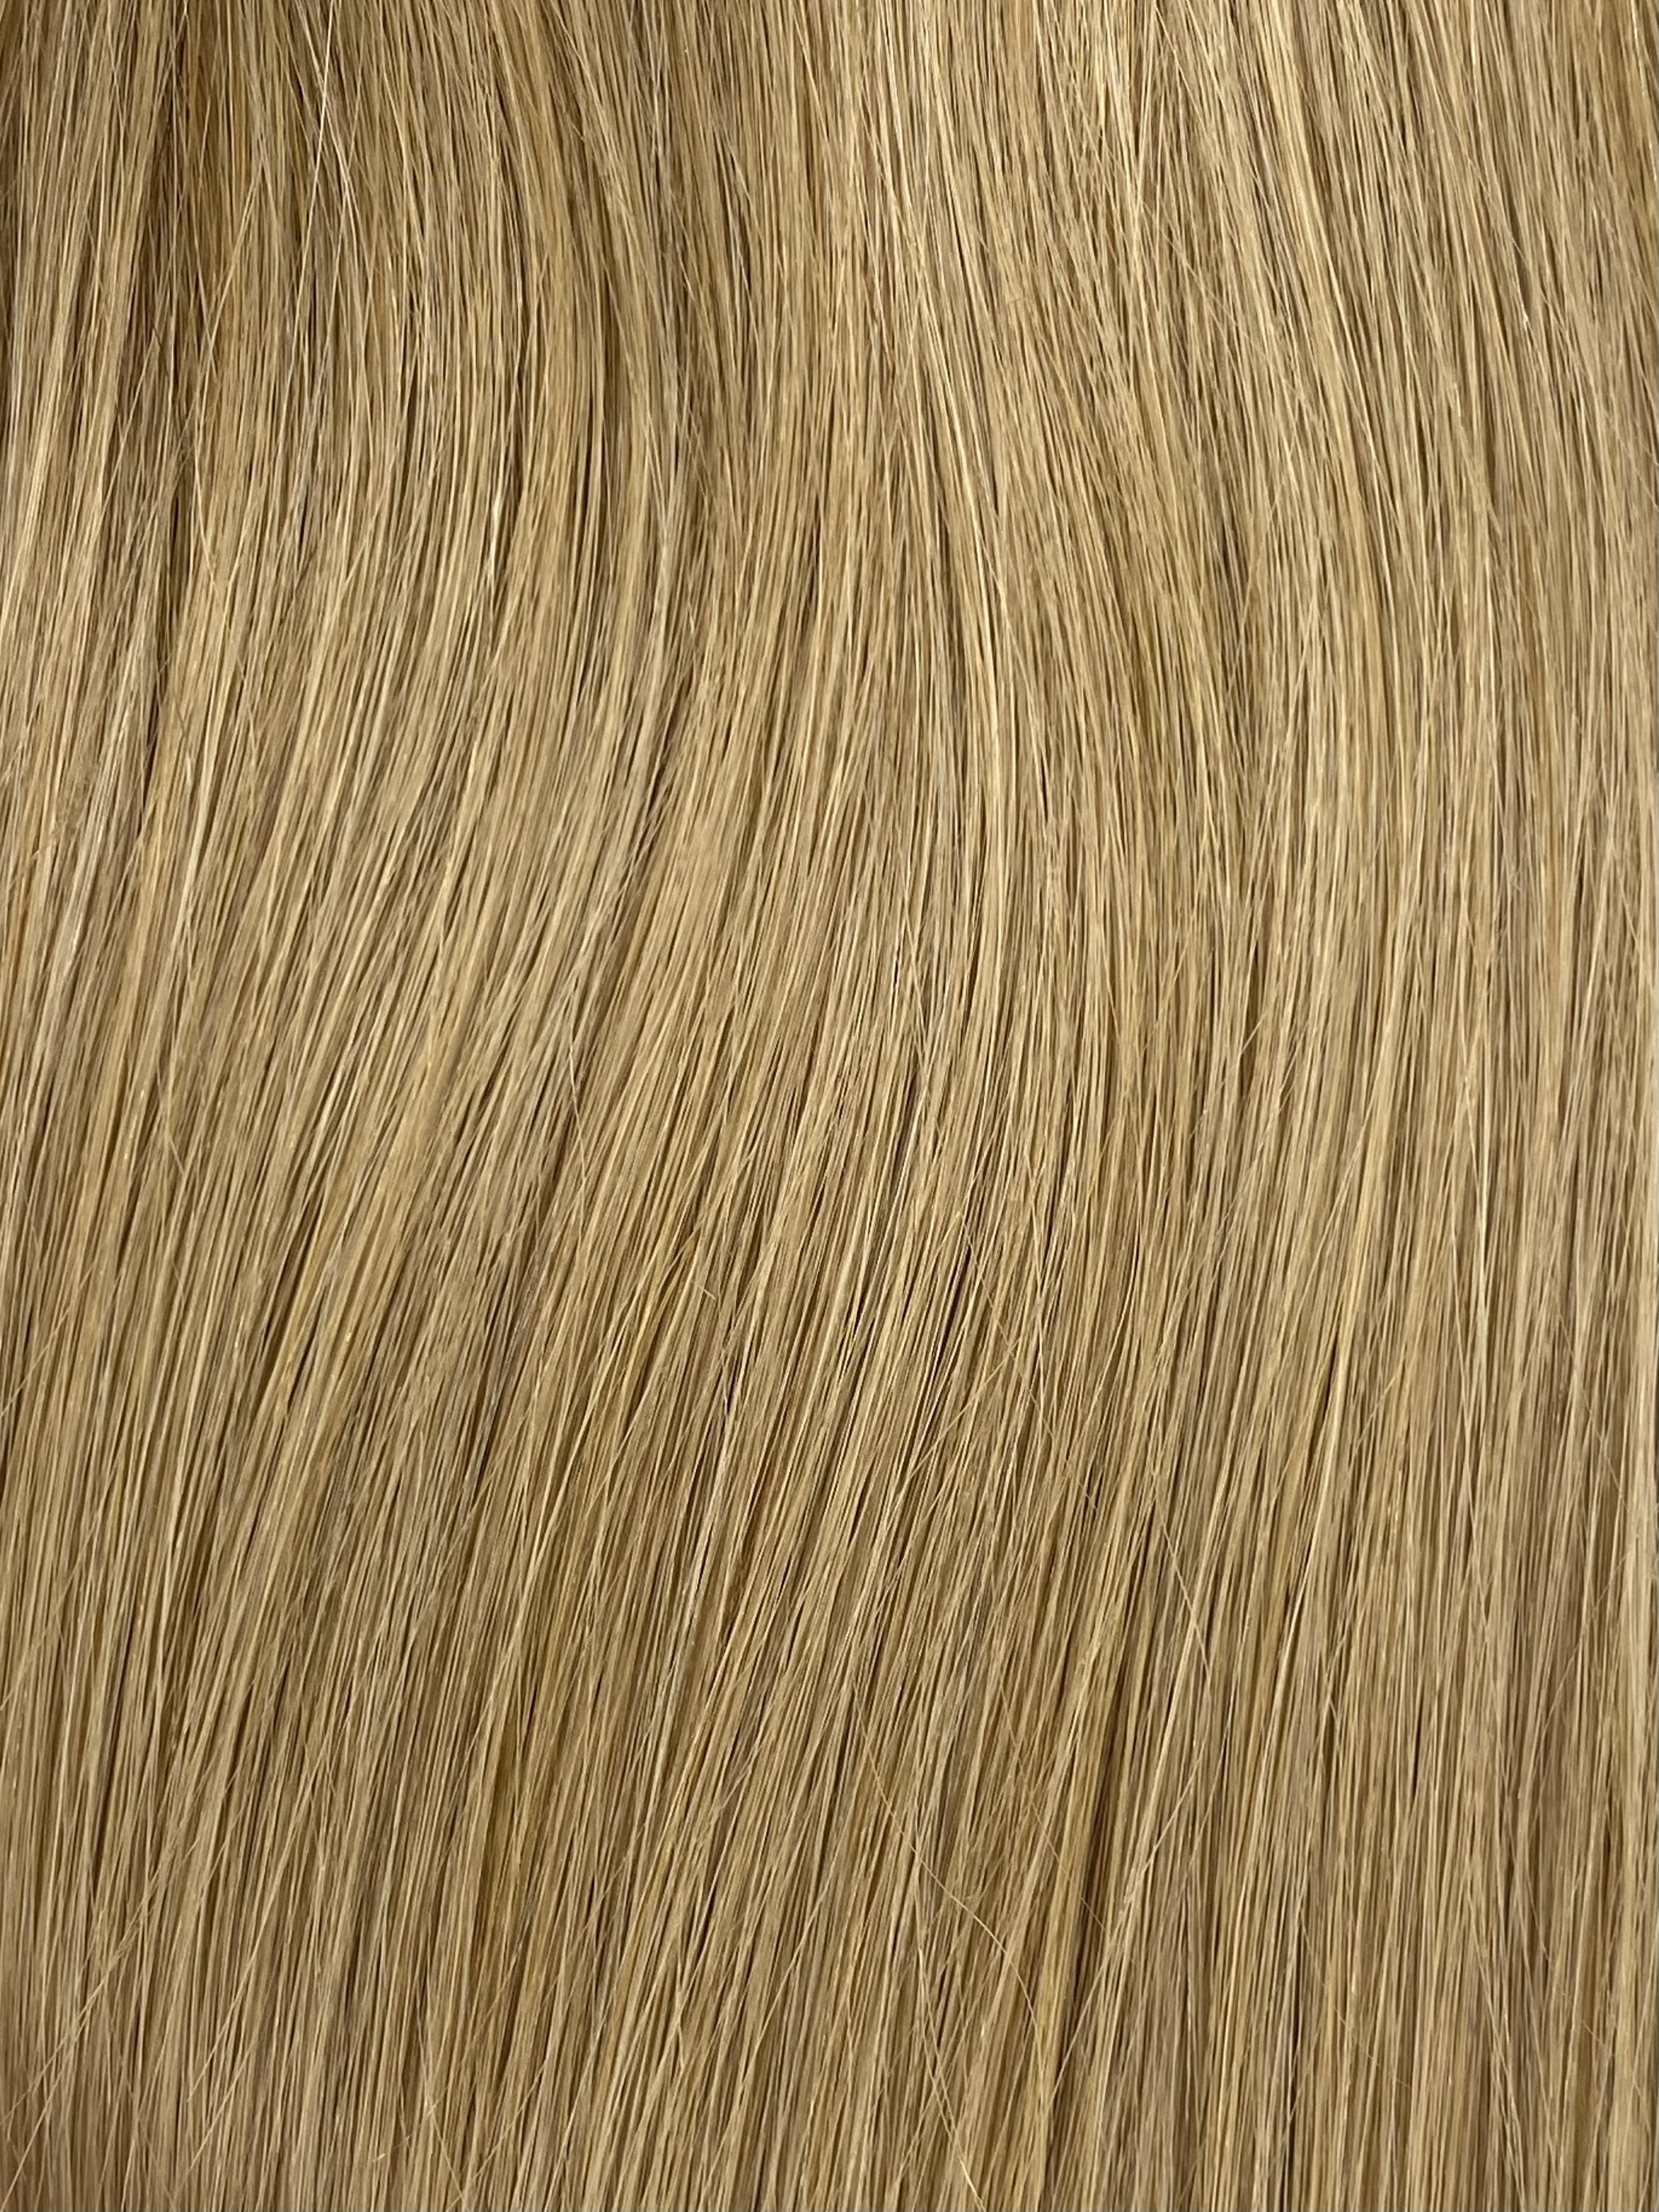 Velo Sale #10 - 20 inches - Dark Ash Blonde